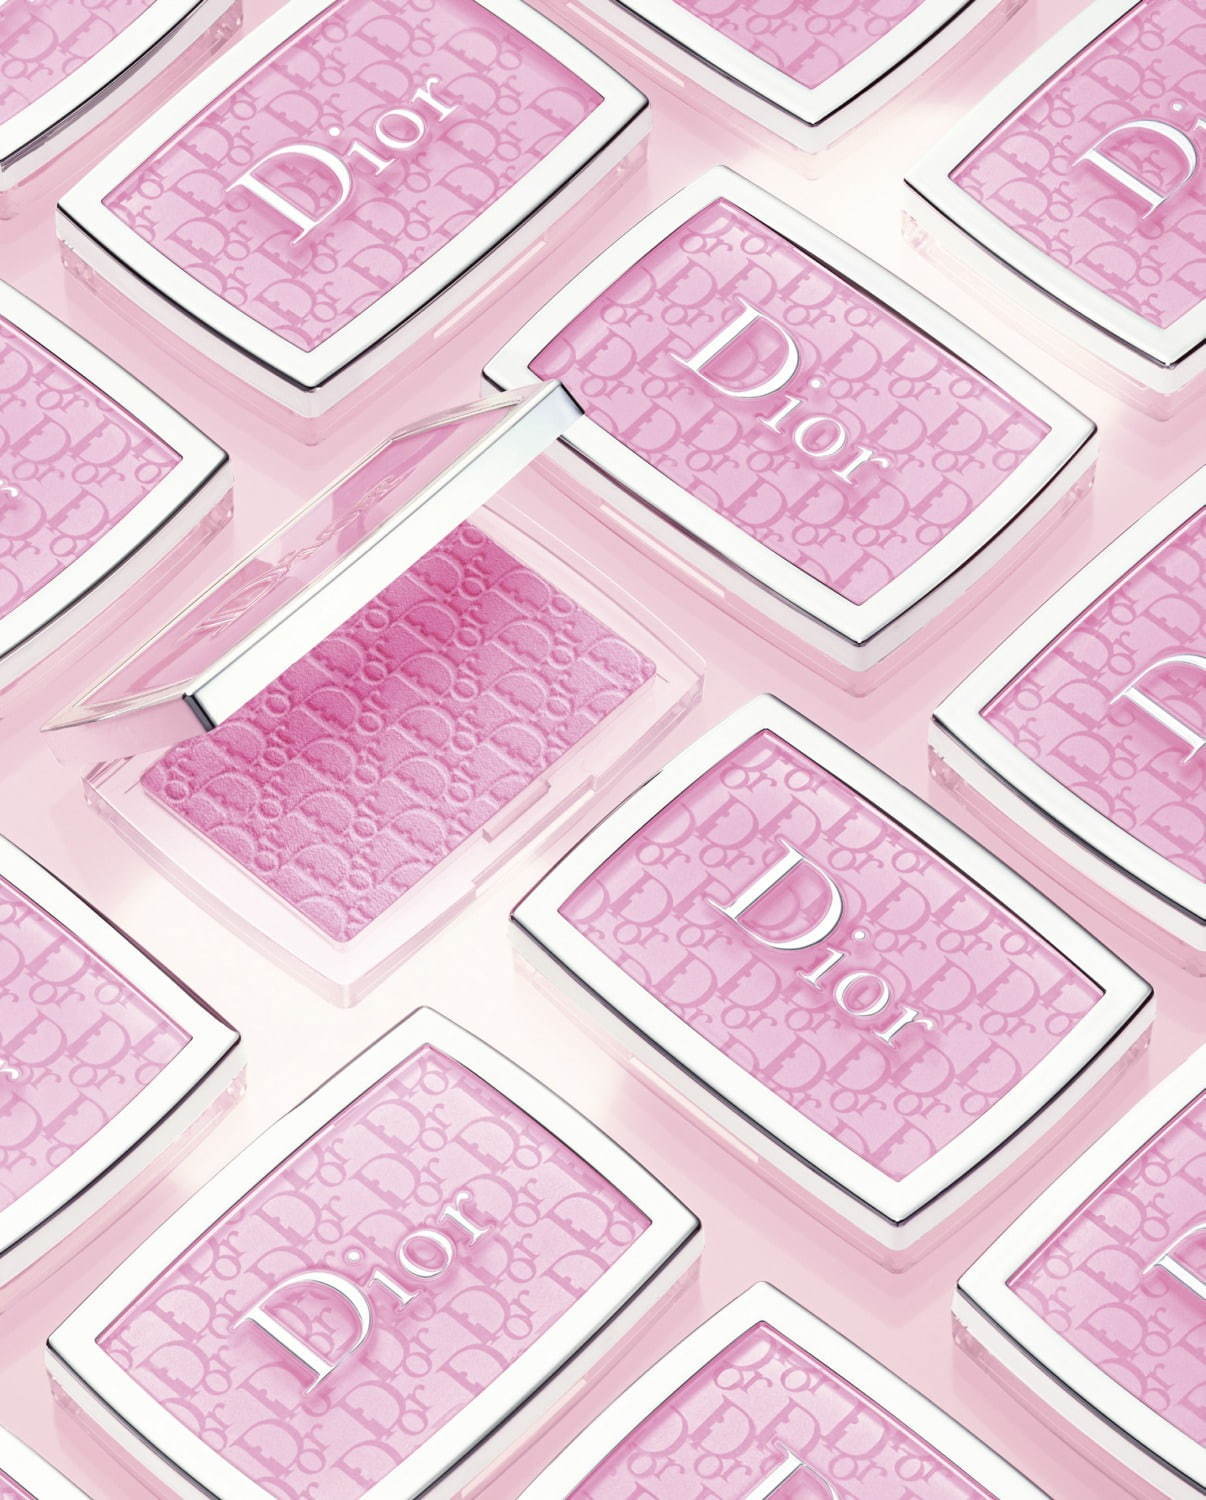 Dior バックステージ ロージーグロウ チークカラー